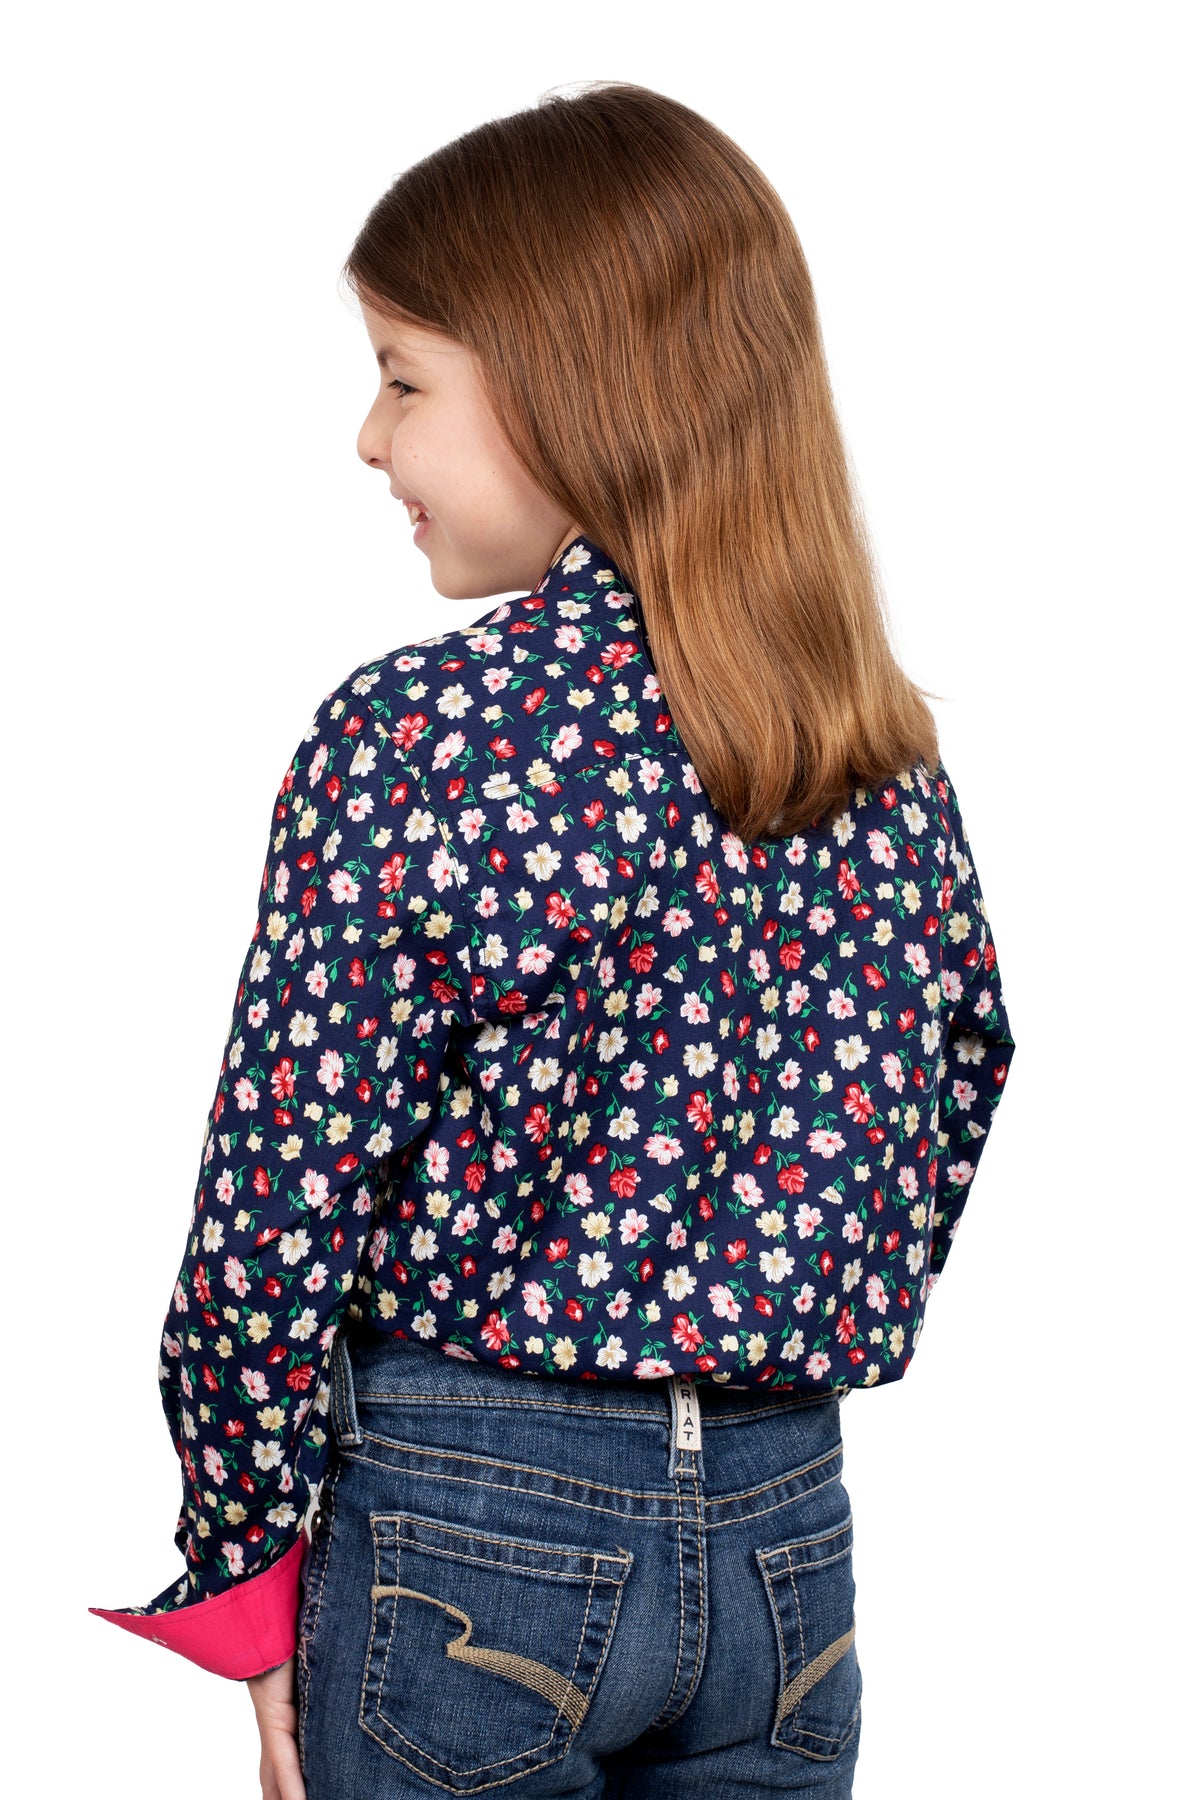 Just Country Girls Harper Half Button Shirt - Navy Floral